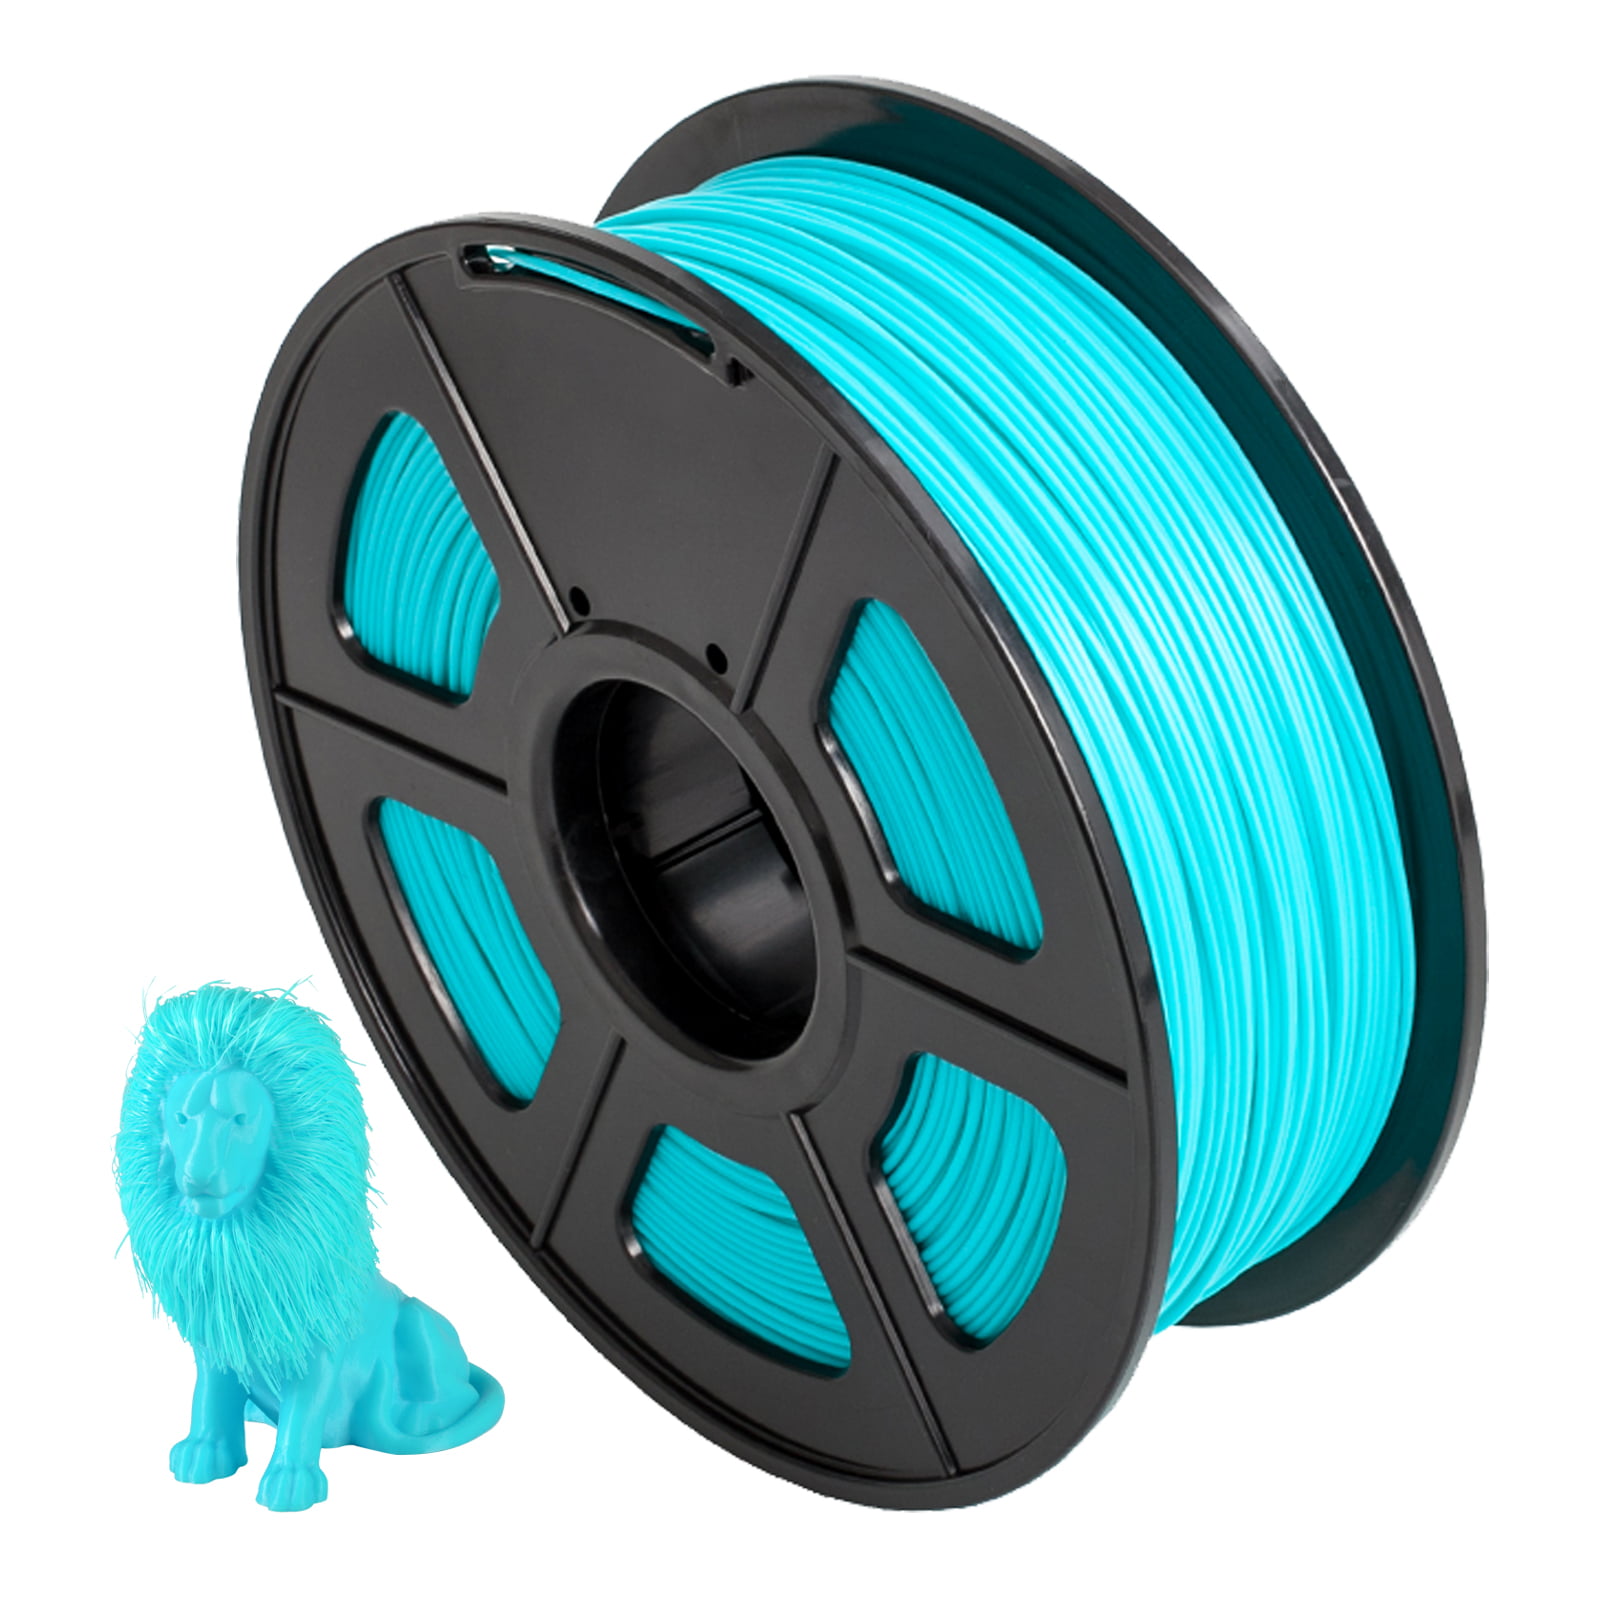 SUNLU PETG Filament 1.75mm Dimensional Accuracy +/- 0.02 mm Transparent Blue PETG Black PETG 3D Printer Filament 1 kg Spool 